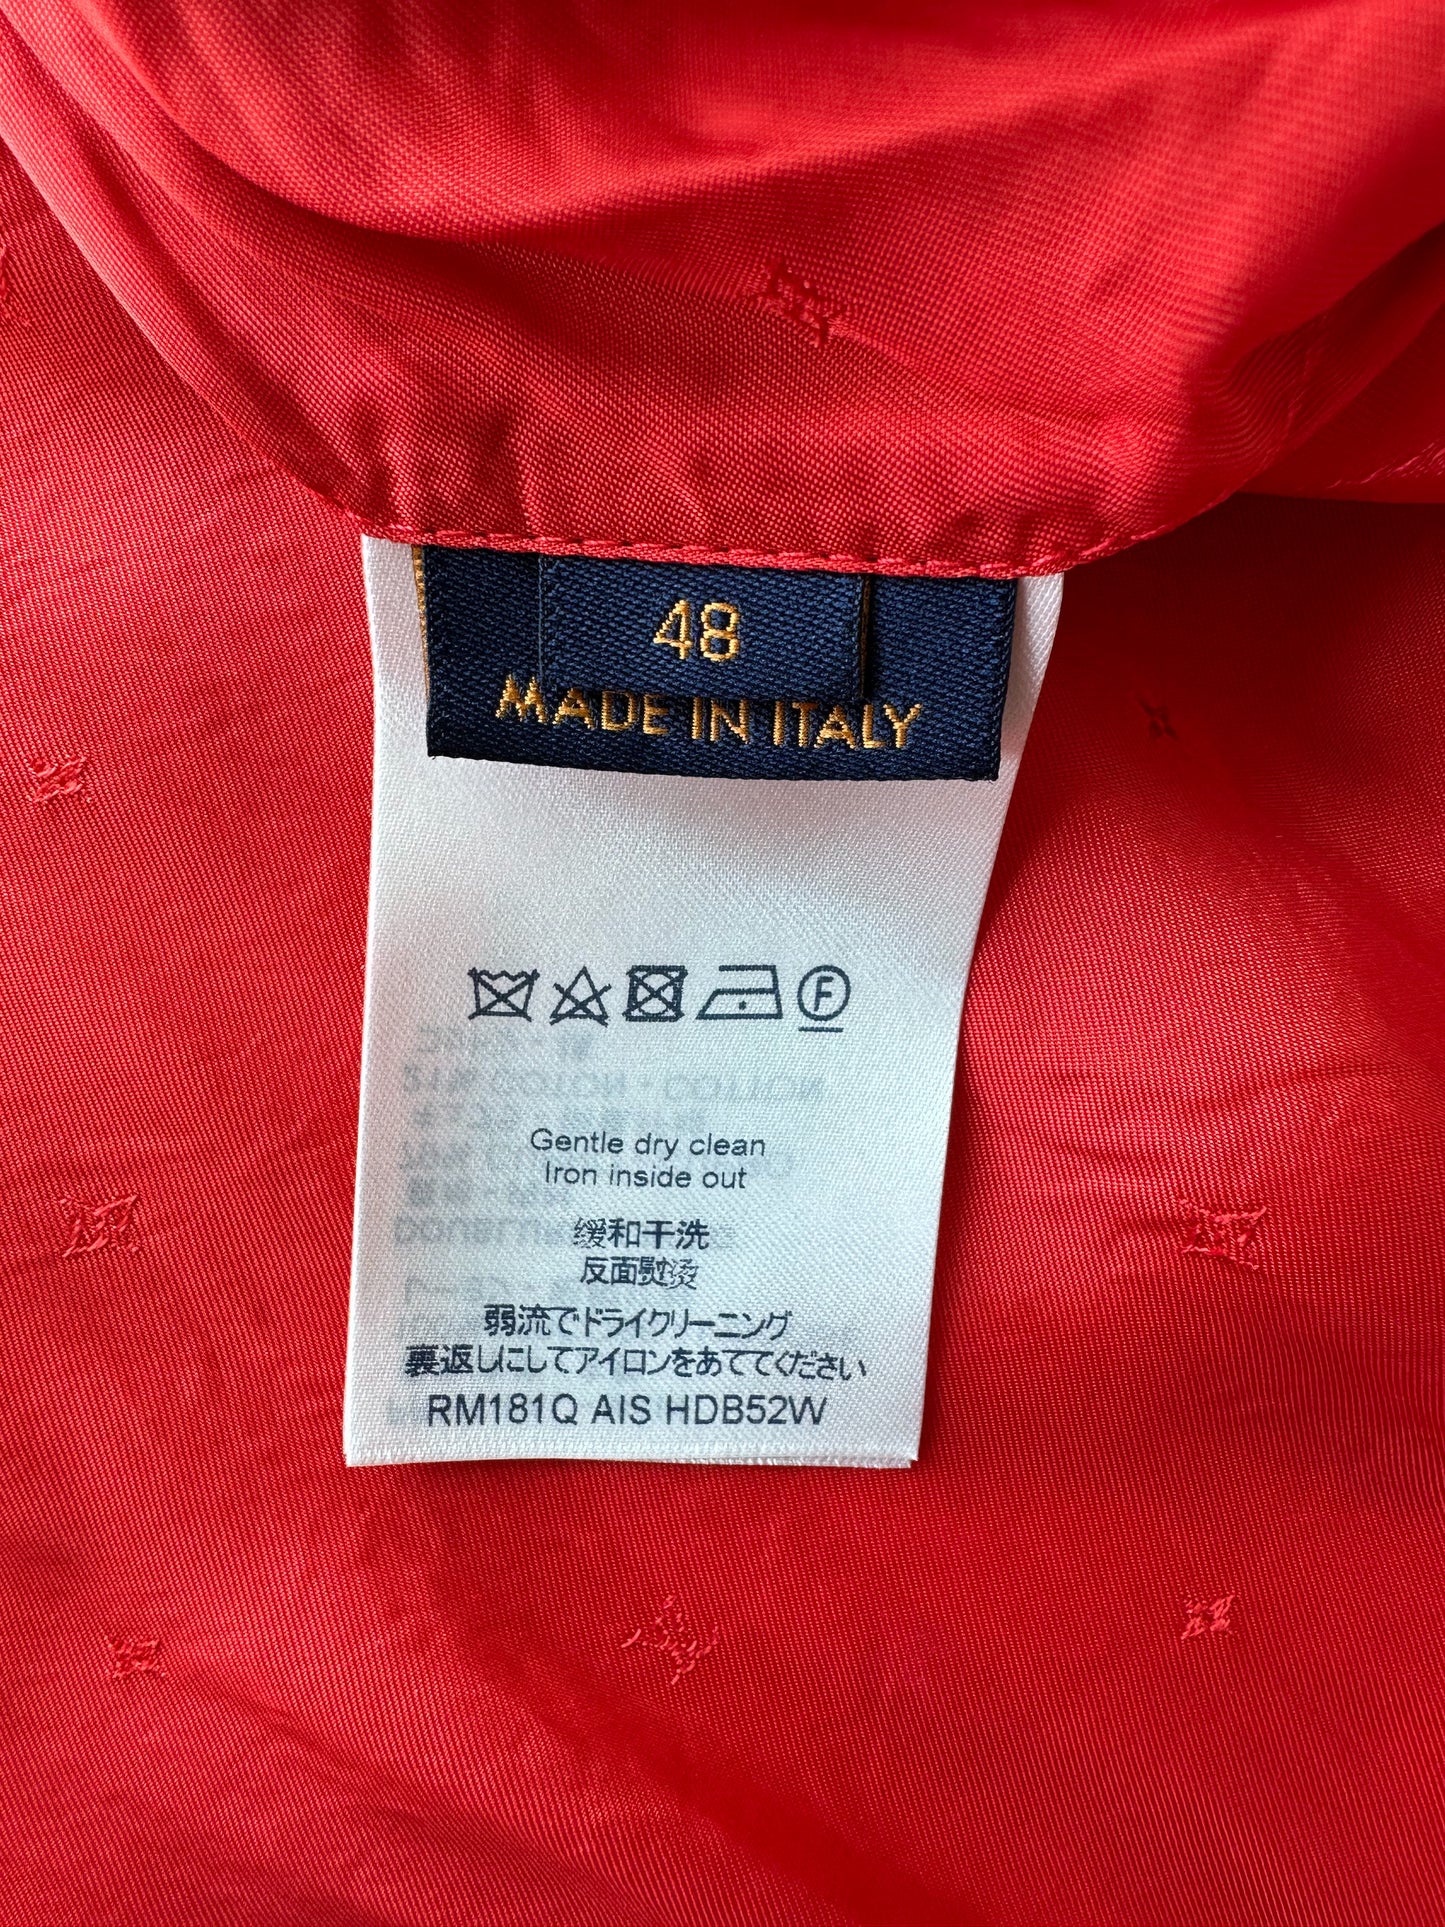 Louis Vuitton embroidered souvenir jacket